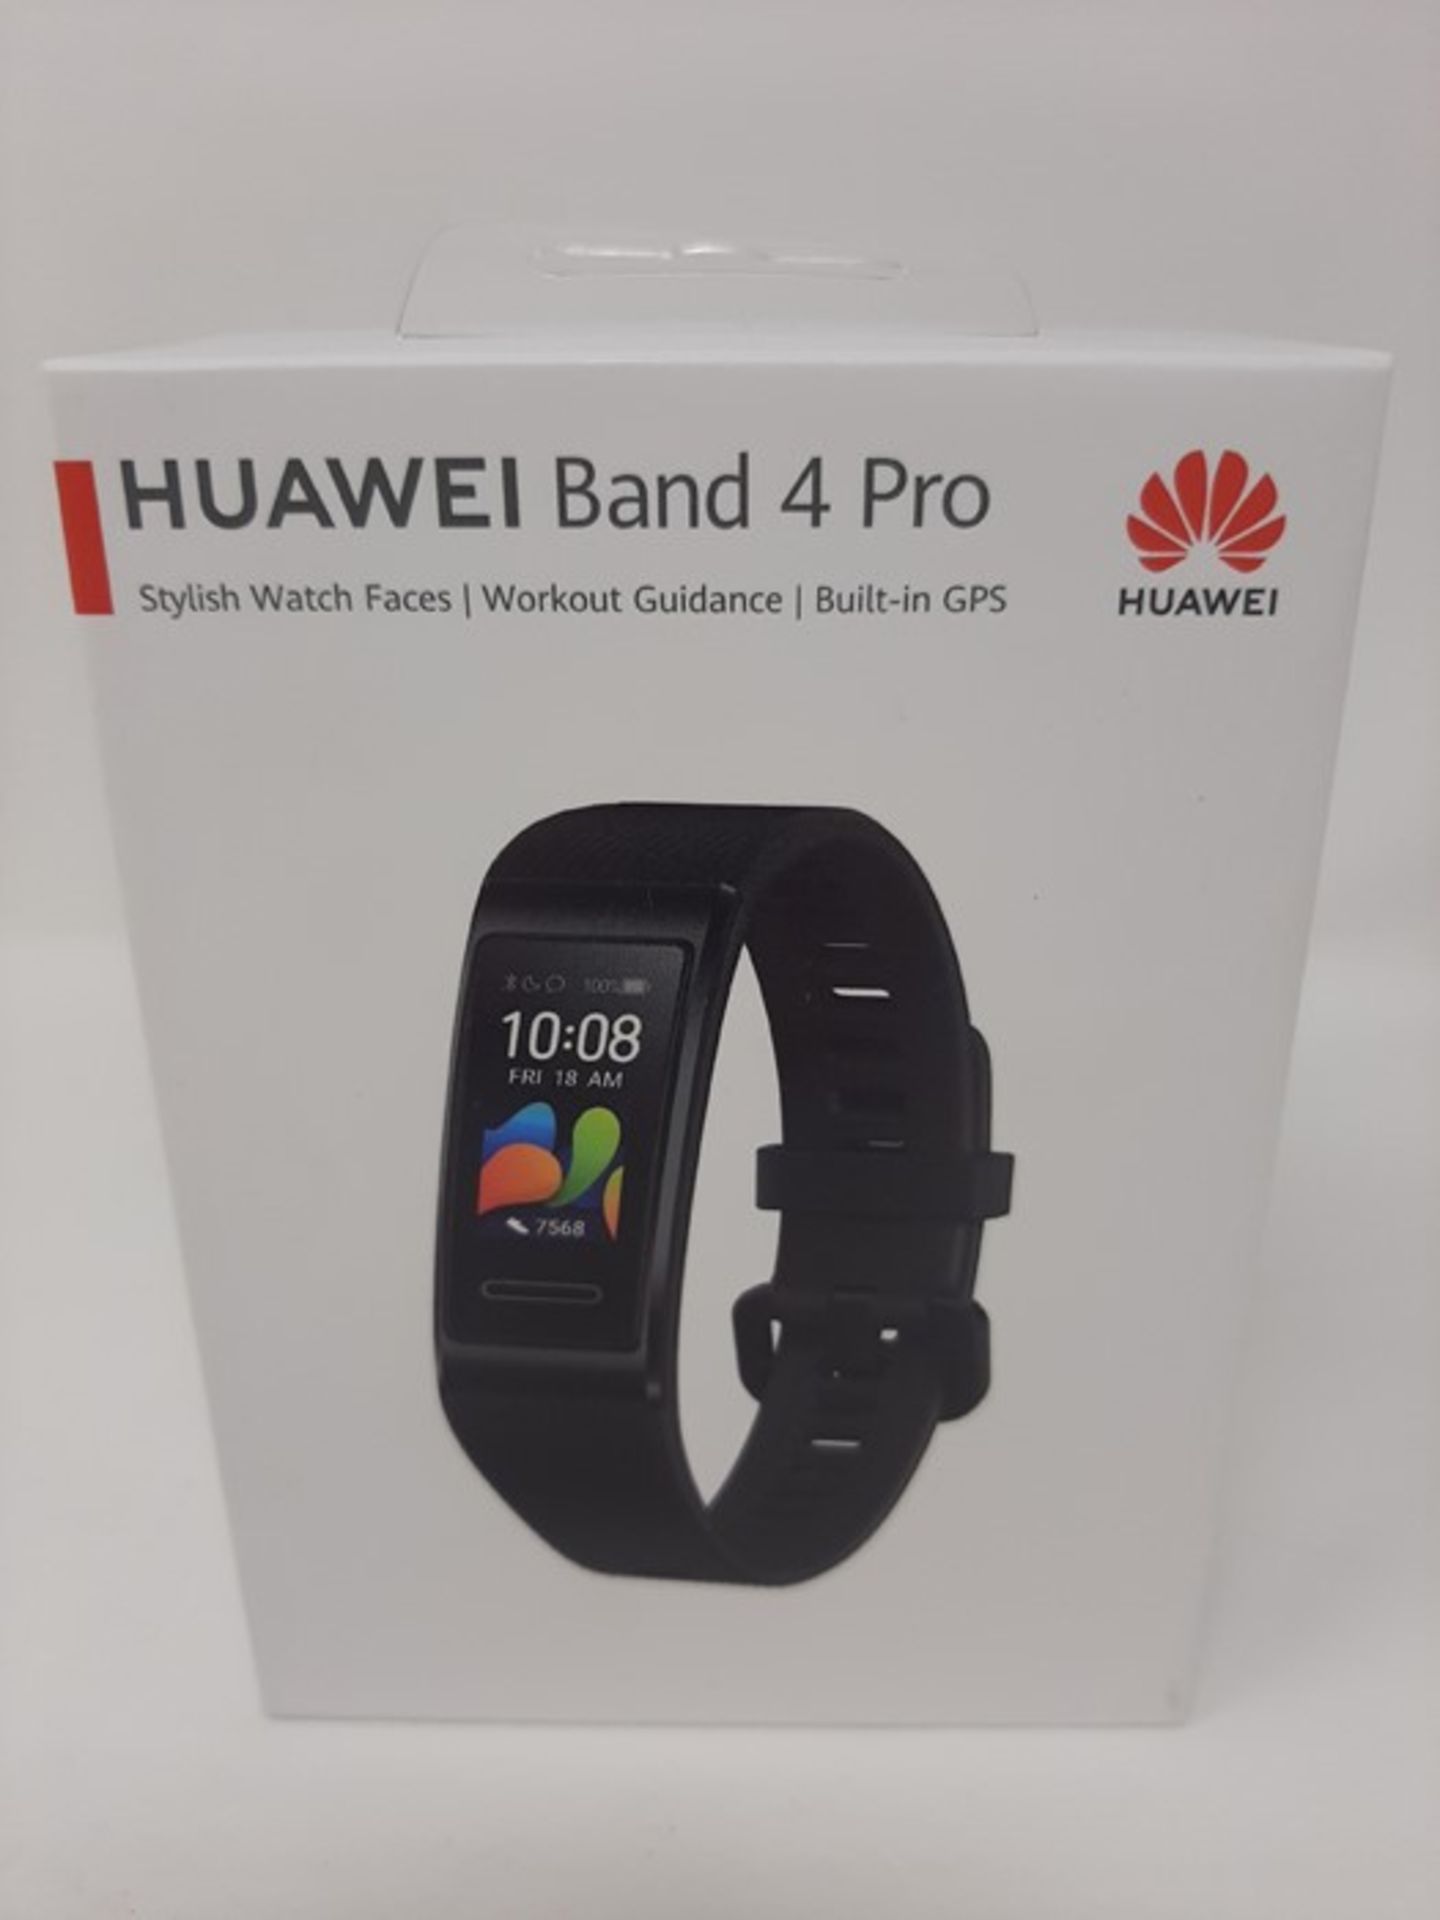 HUAWEI Band 4 Pro - Smart Band Fitness Tracker w - Image 2 of 2